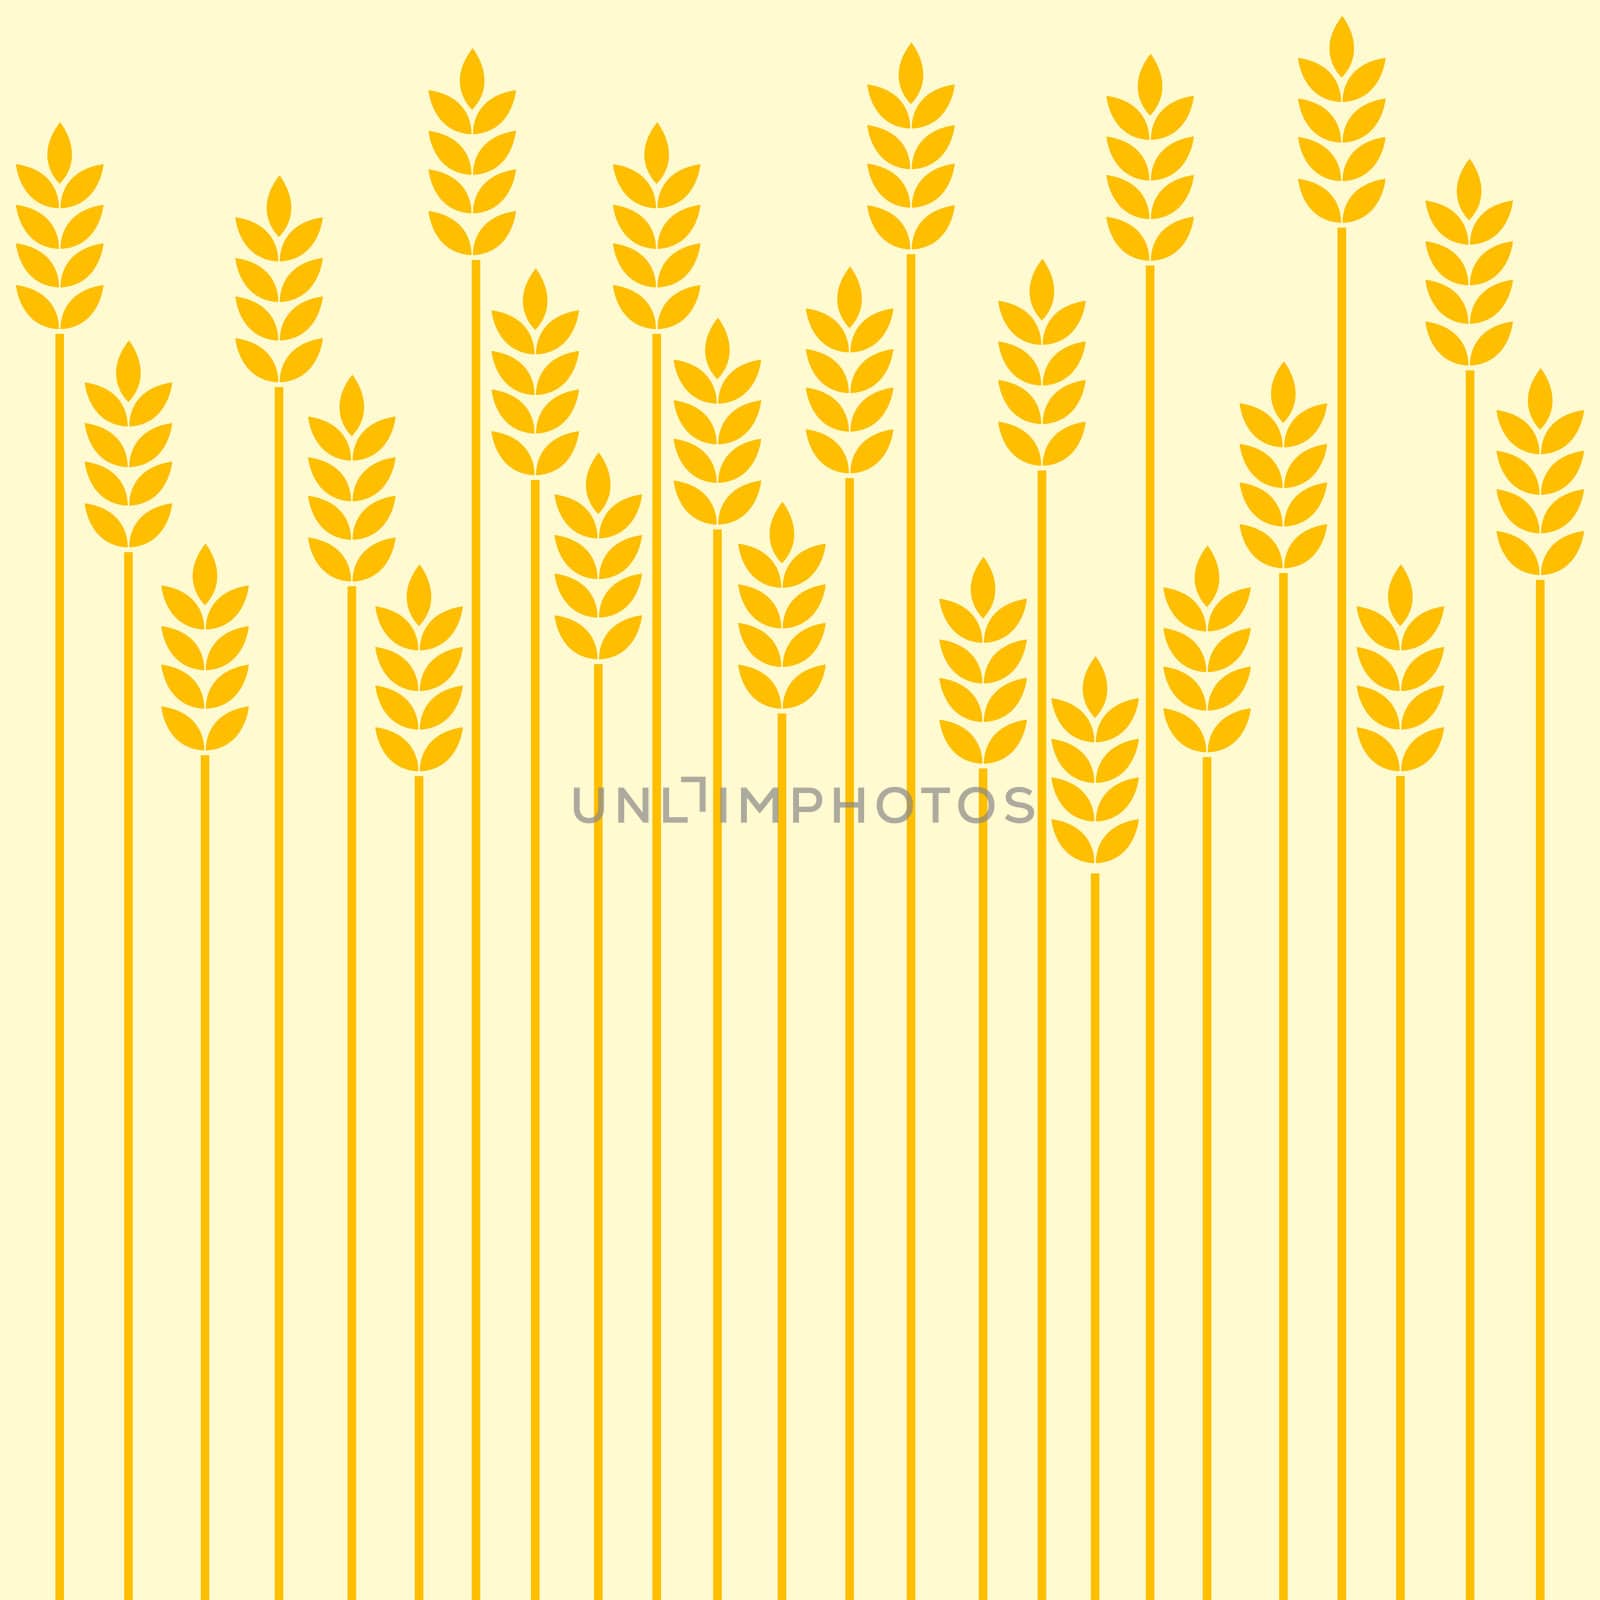 Wheat by Lirch